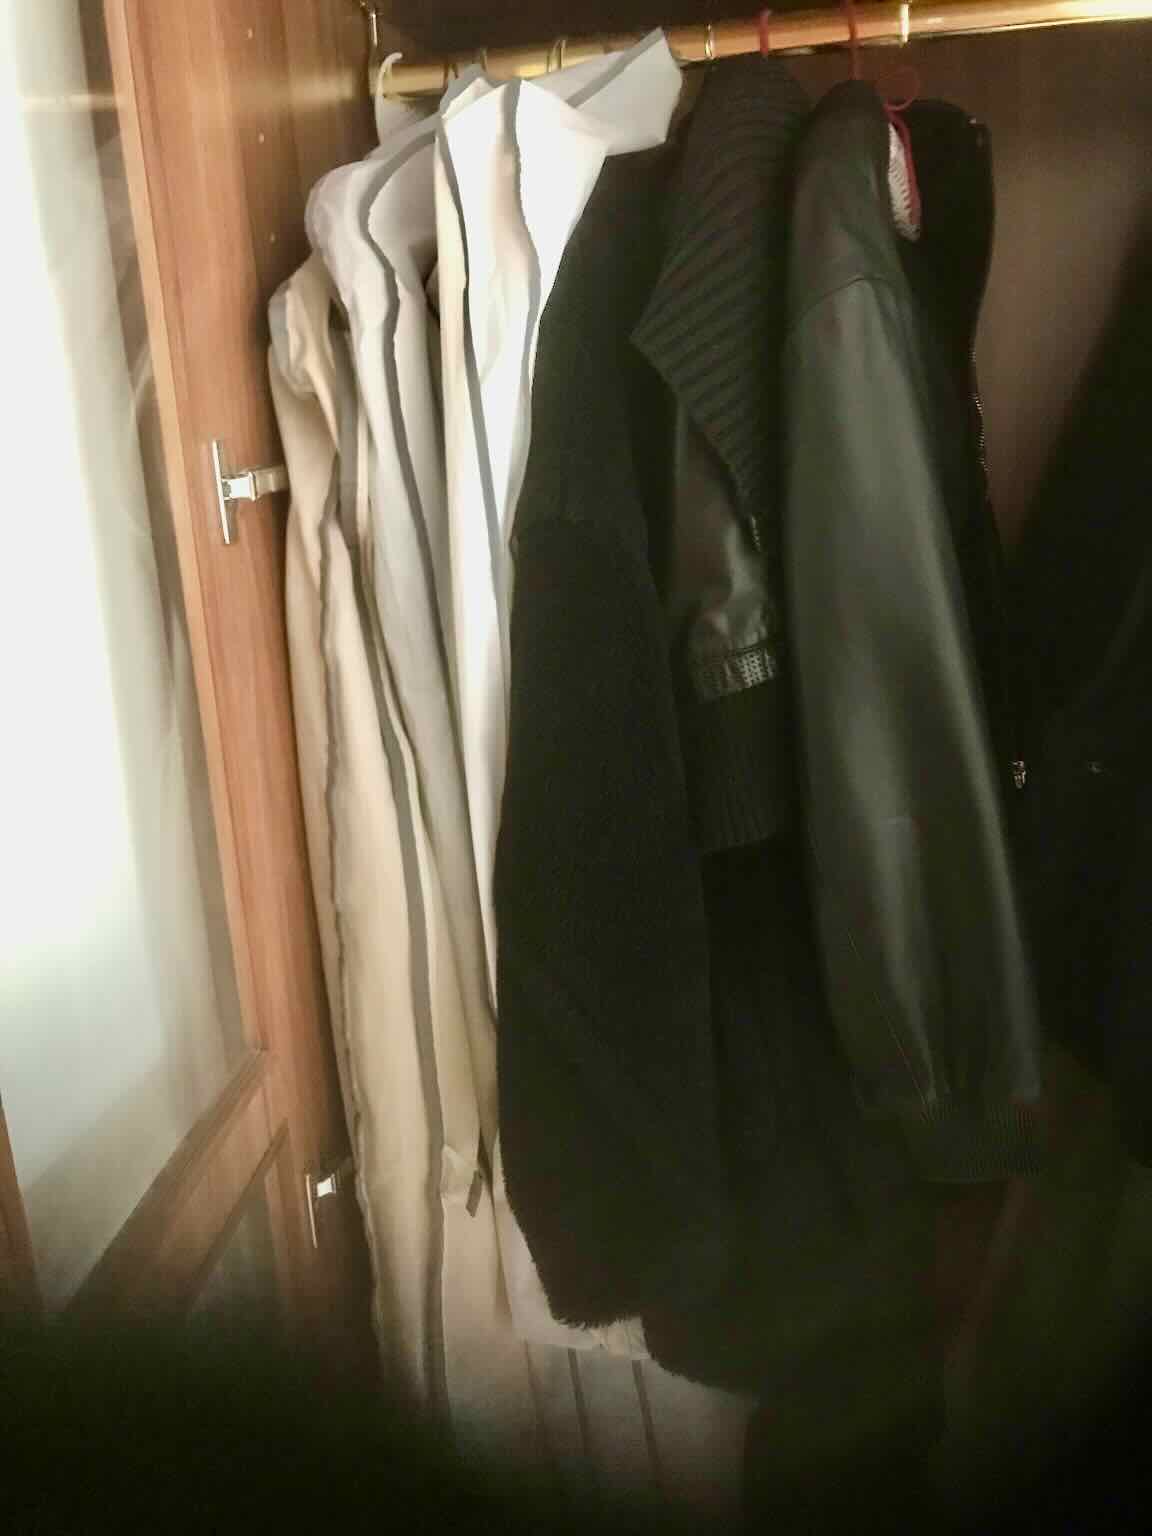 garments in closet